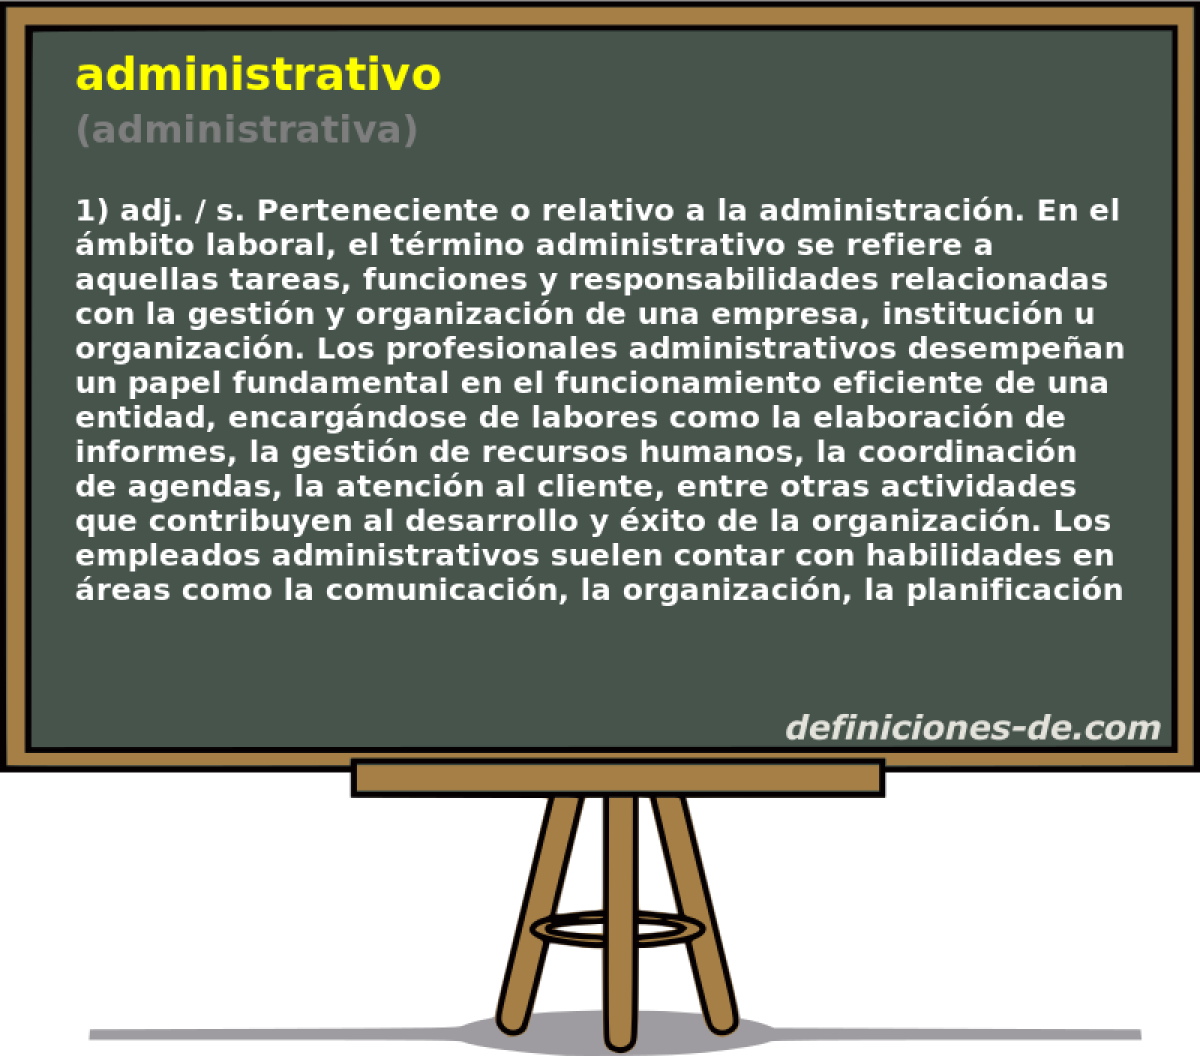 administrativo (administrativa)